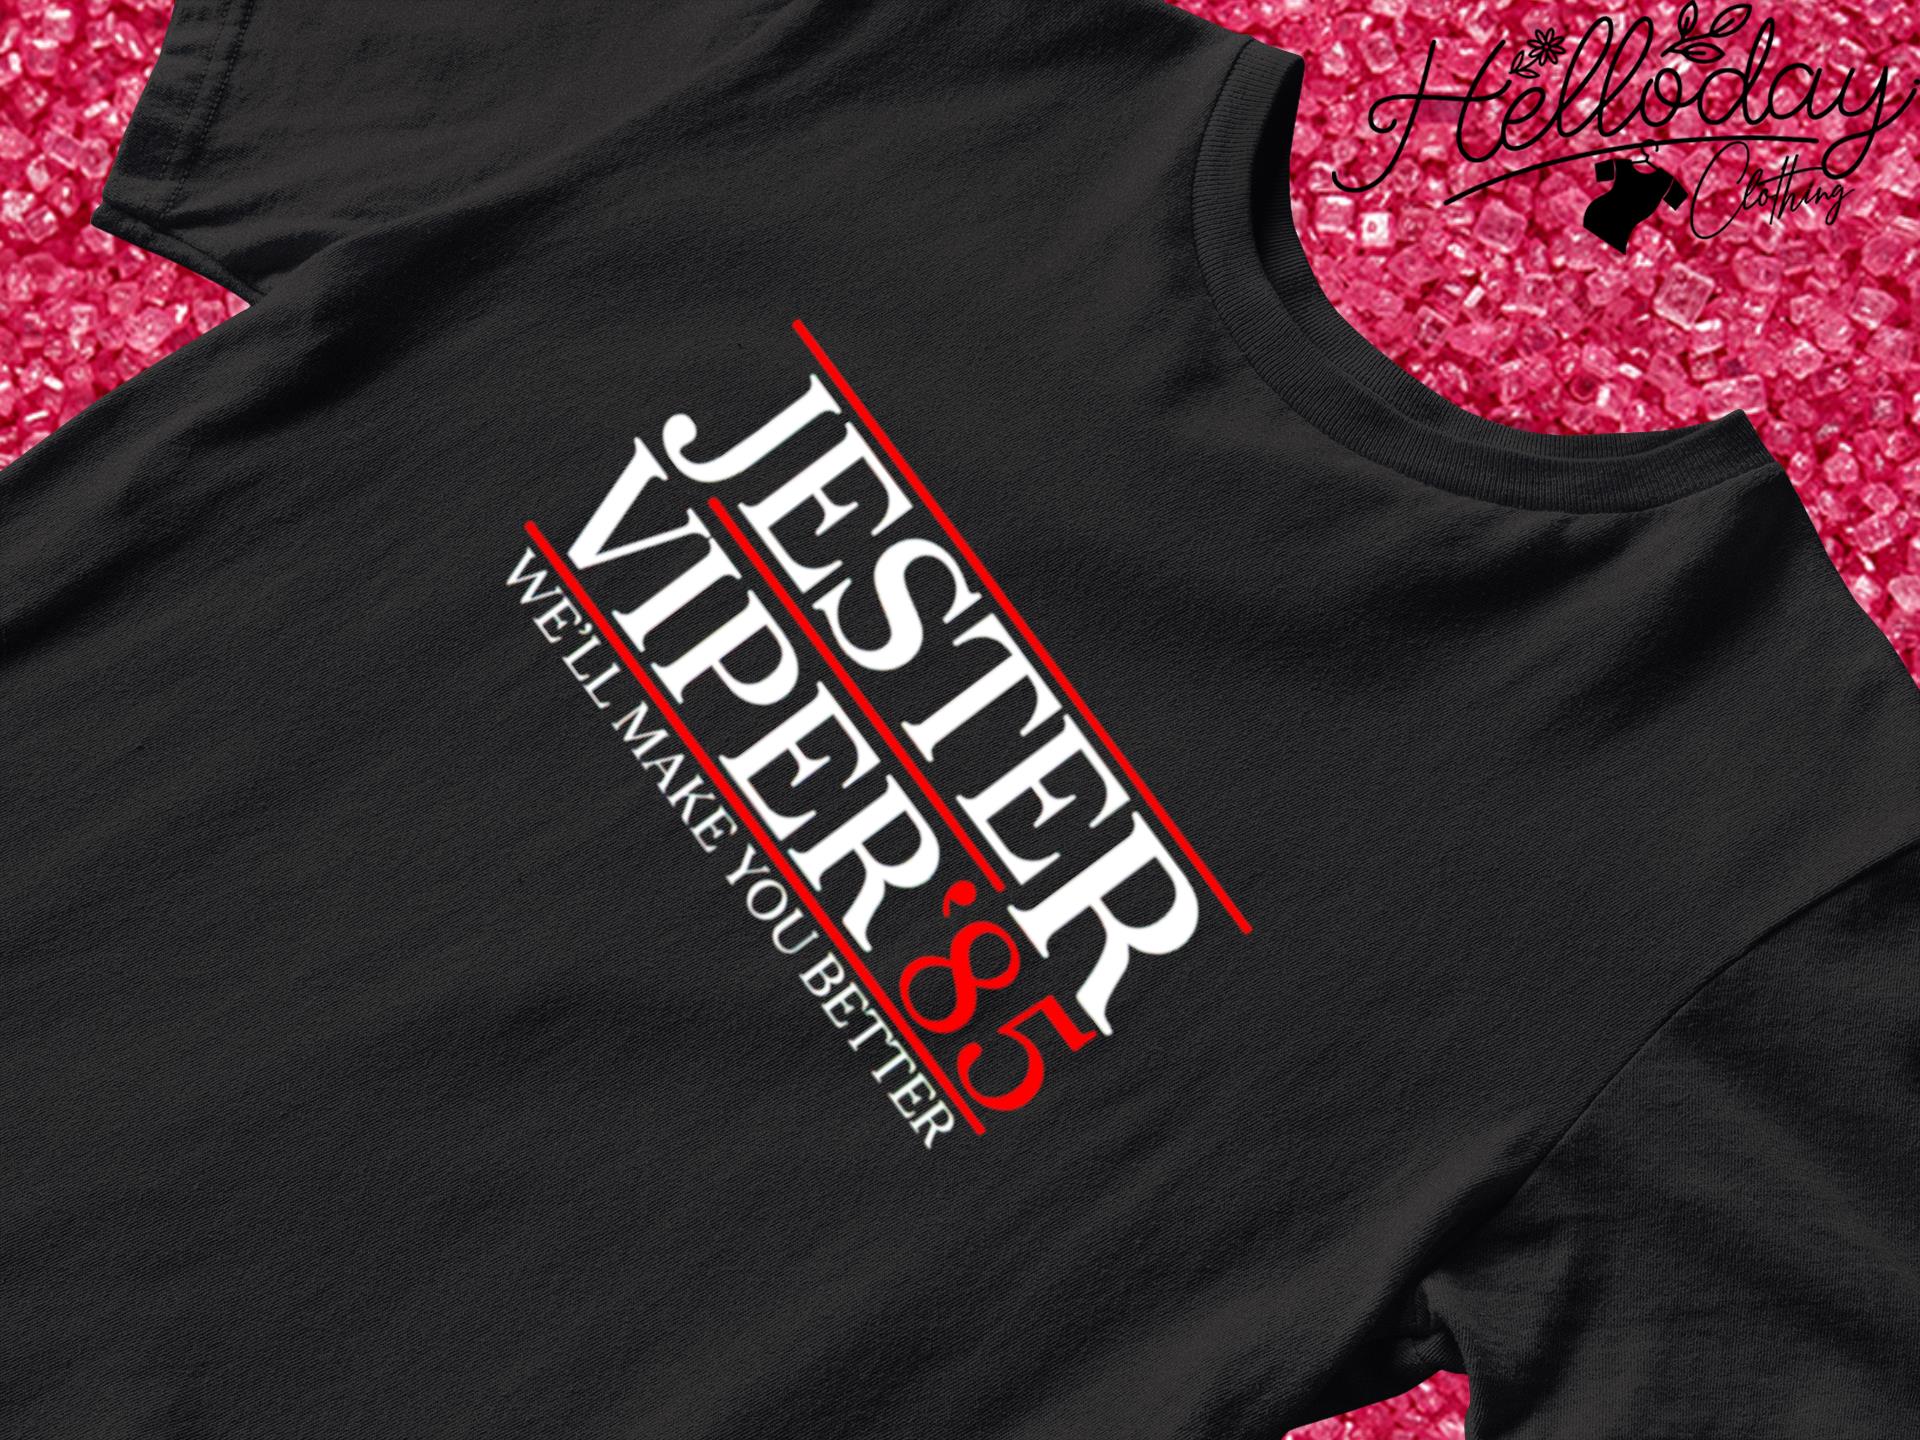 Jester Viper '85 we'll make you better shirt